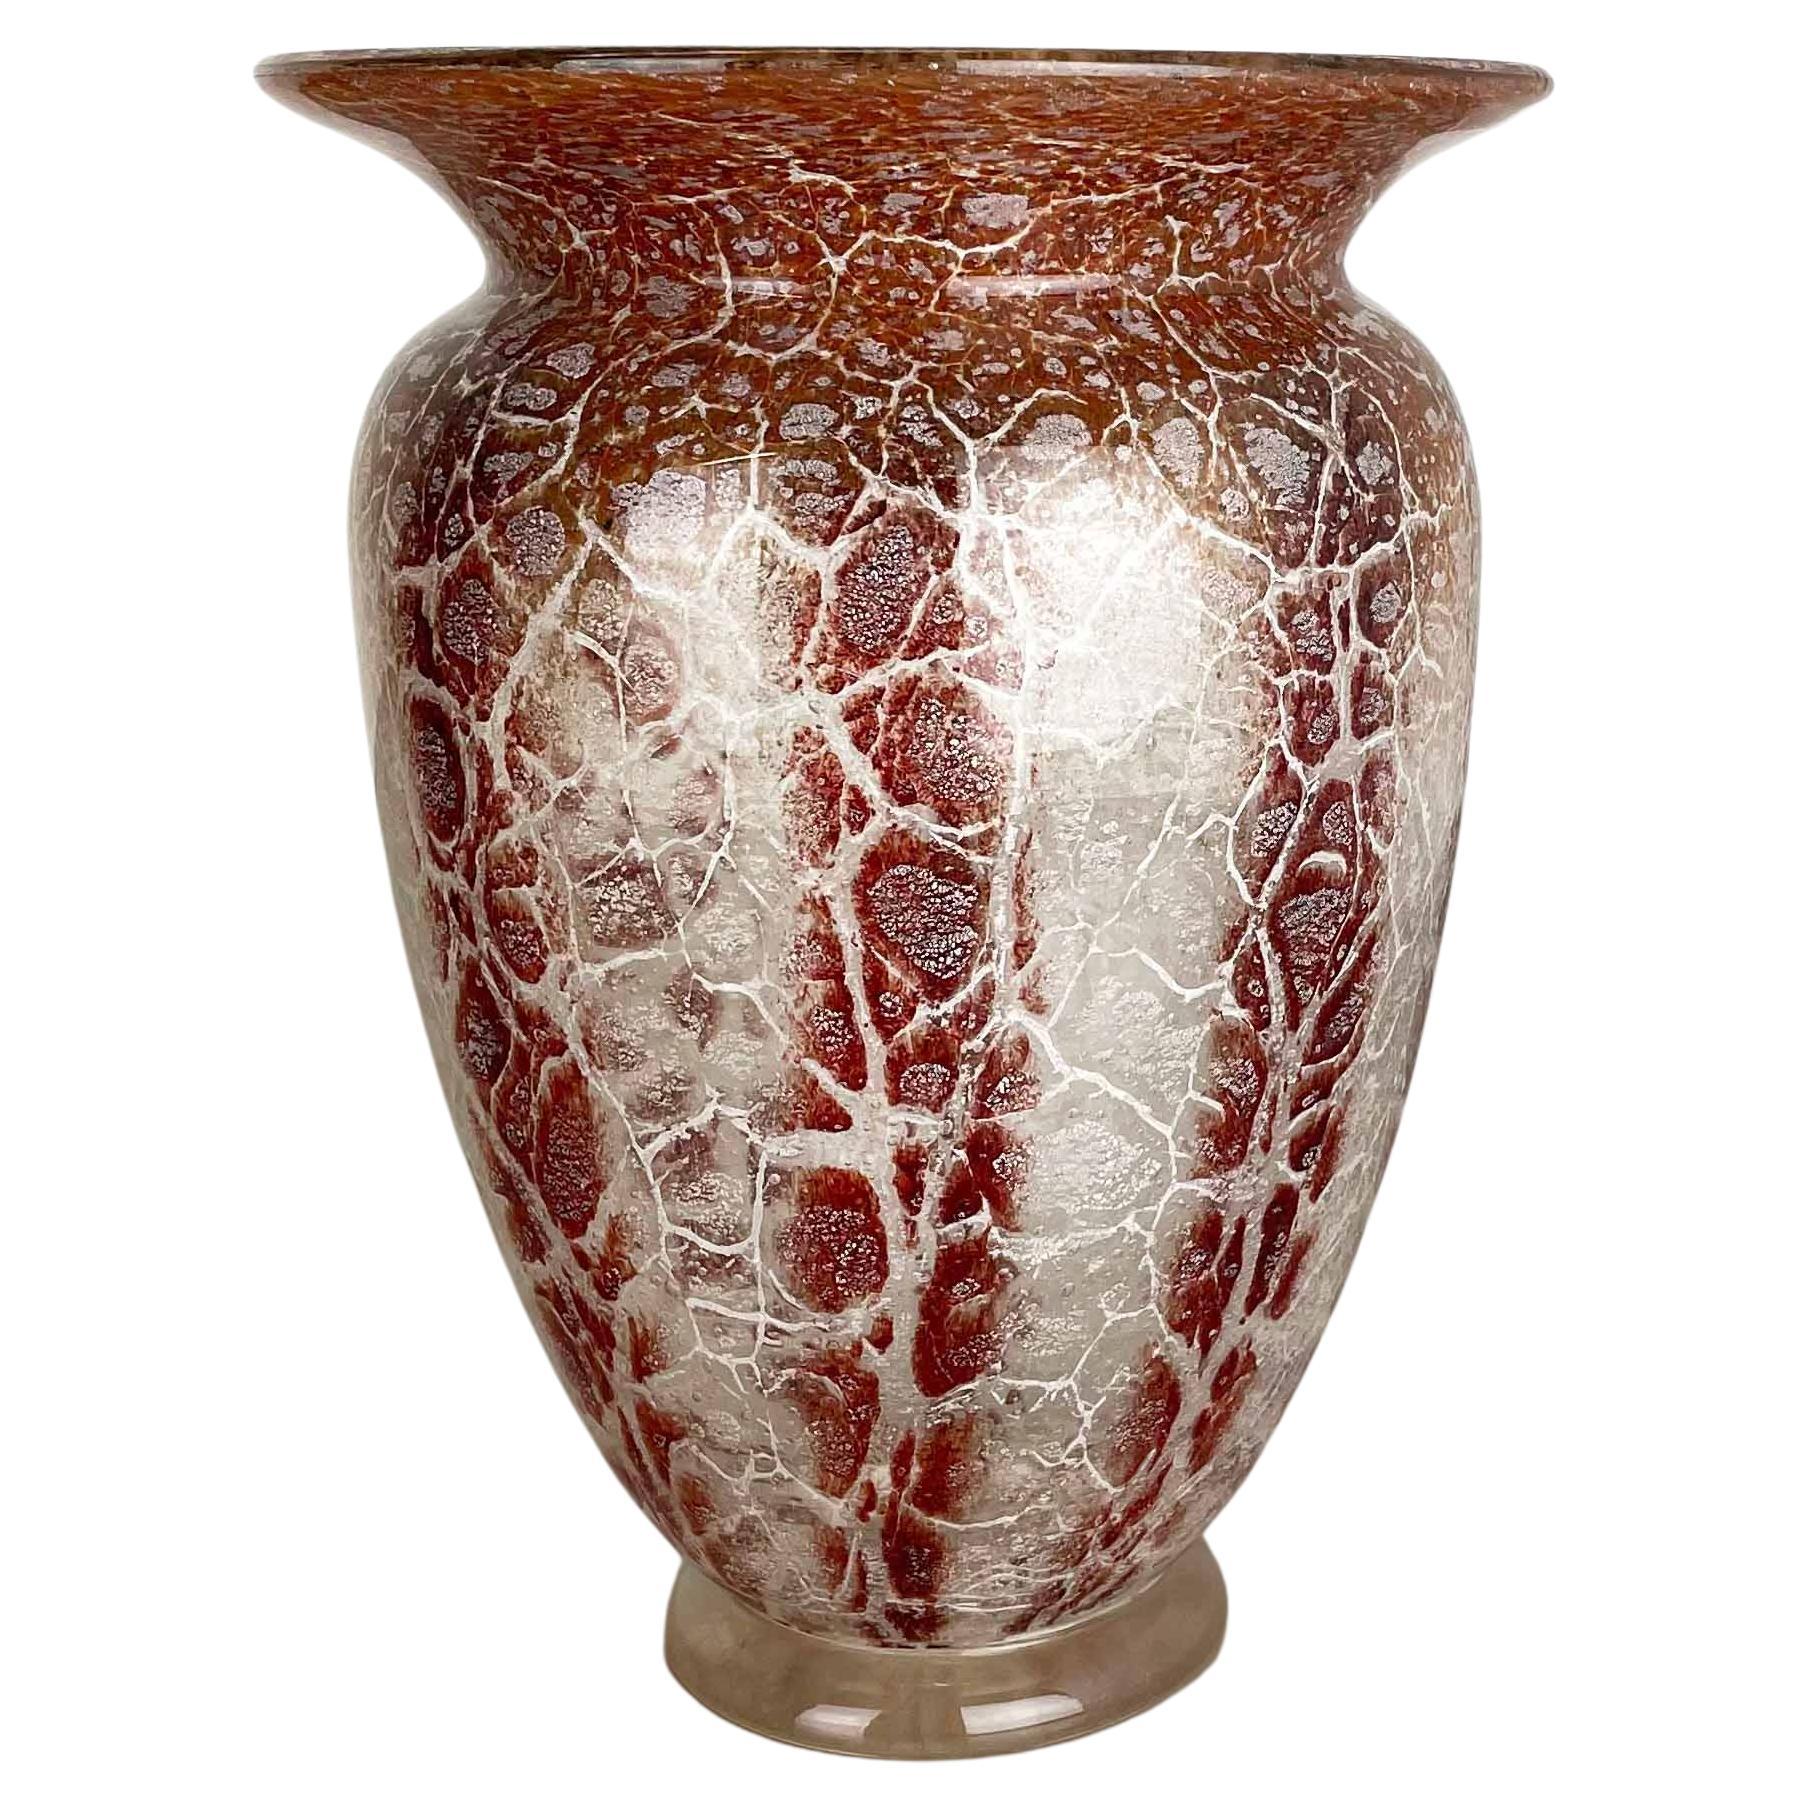 Ikora Glass Vase 2, 3kg by Karl Wiedmann for WMF Germany, 1930s Bauhaus Art Deco For Sale